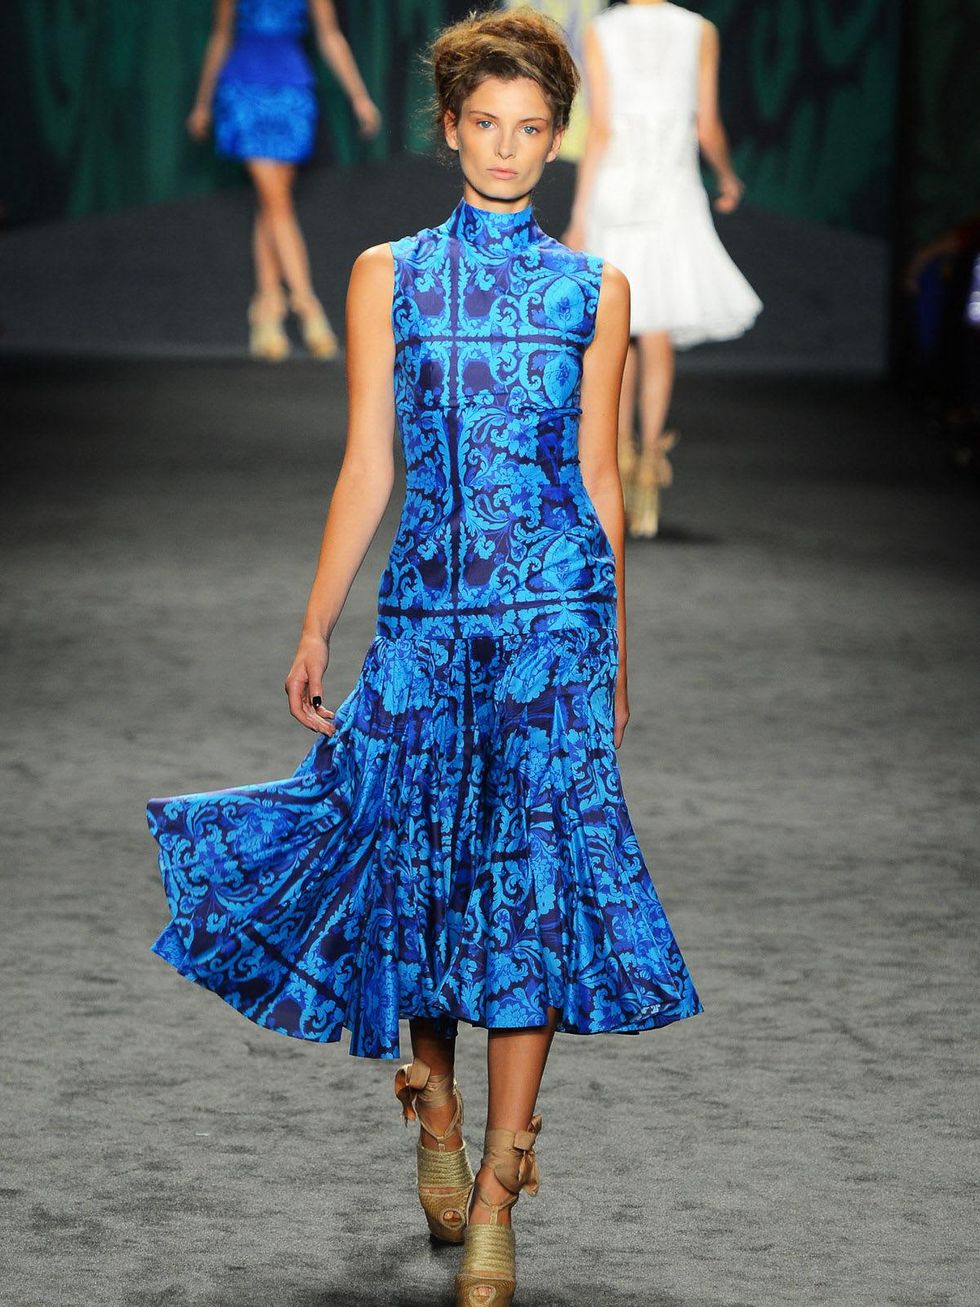 Clifford, Fashion Week spring 2013, Tuesday, Sept. 11, 2012, Vera Wang, blue print dress